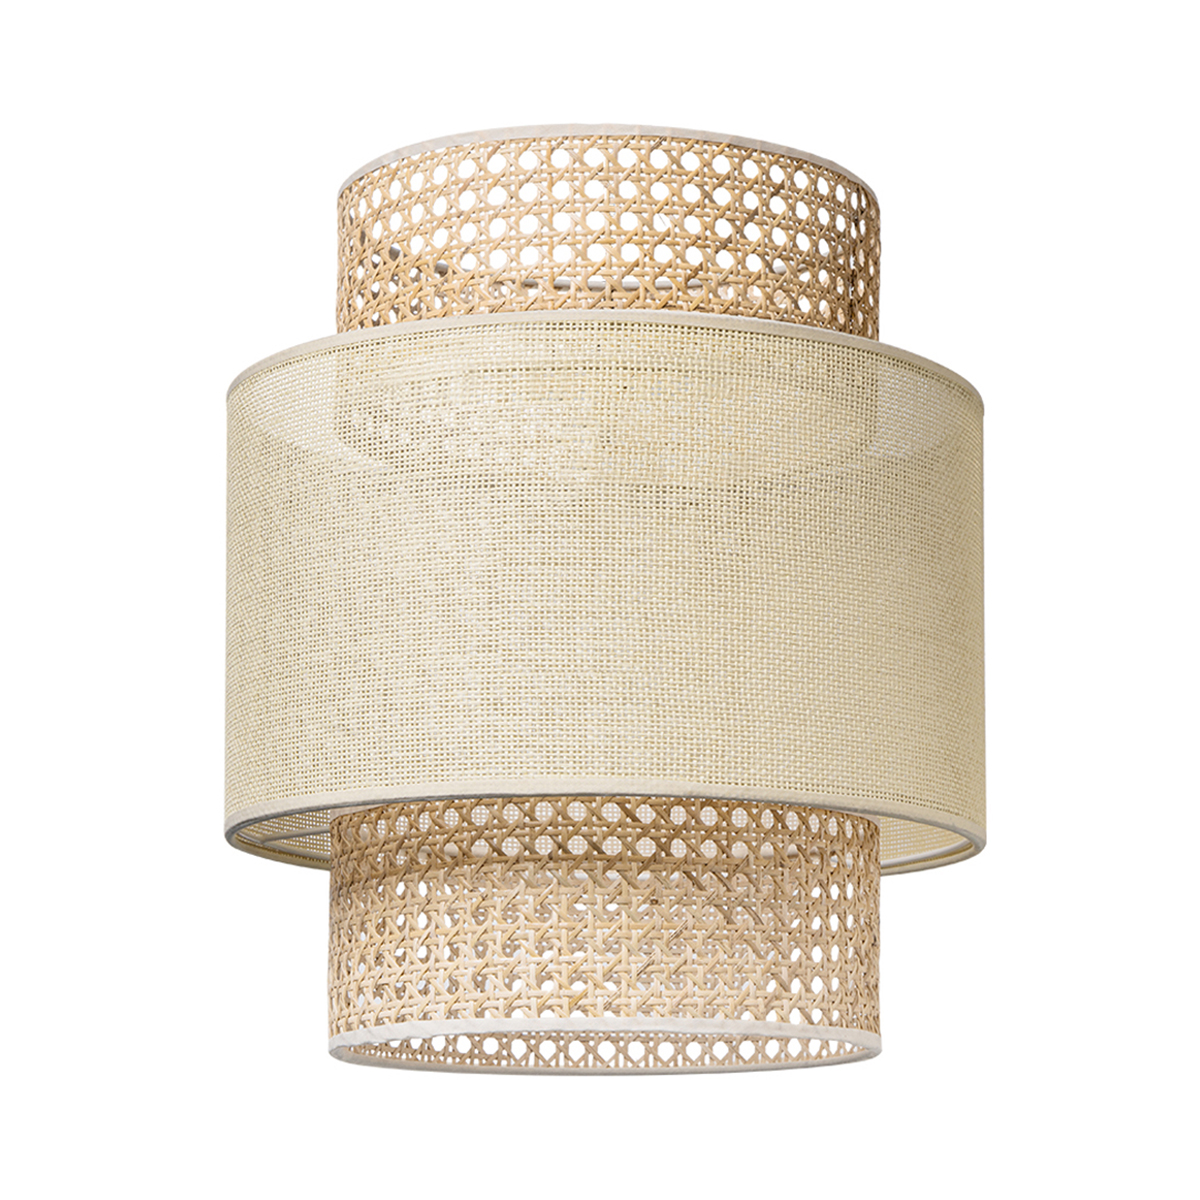 Tangla lighting - TLS7085-01S - Decorative Lampshade - natural rattan and linen in natural - medium - E27